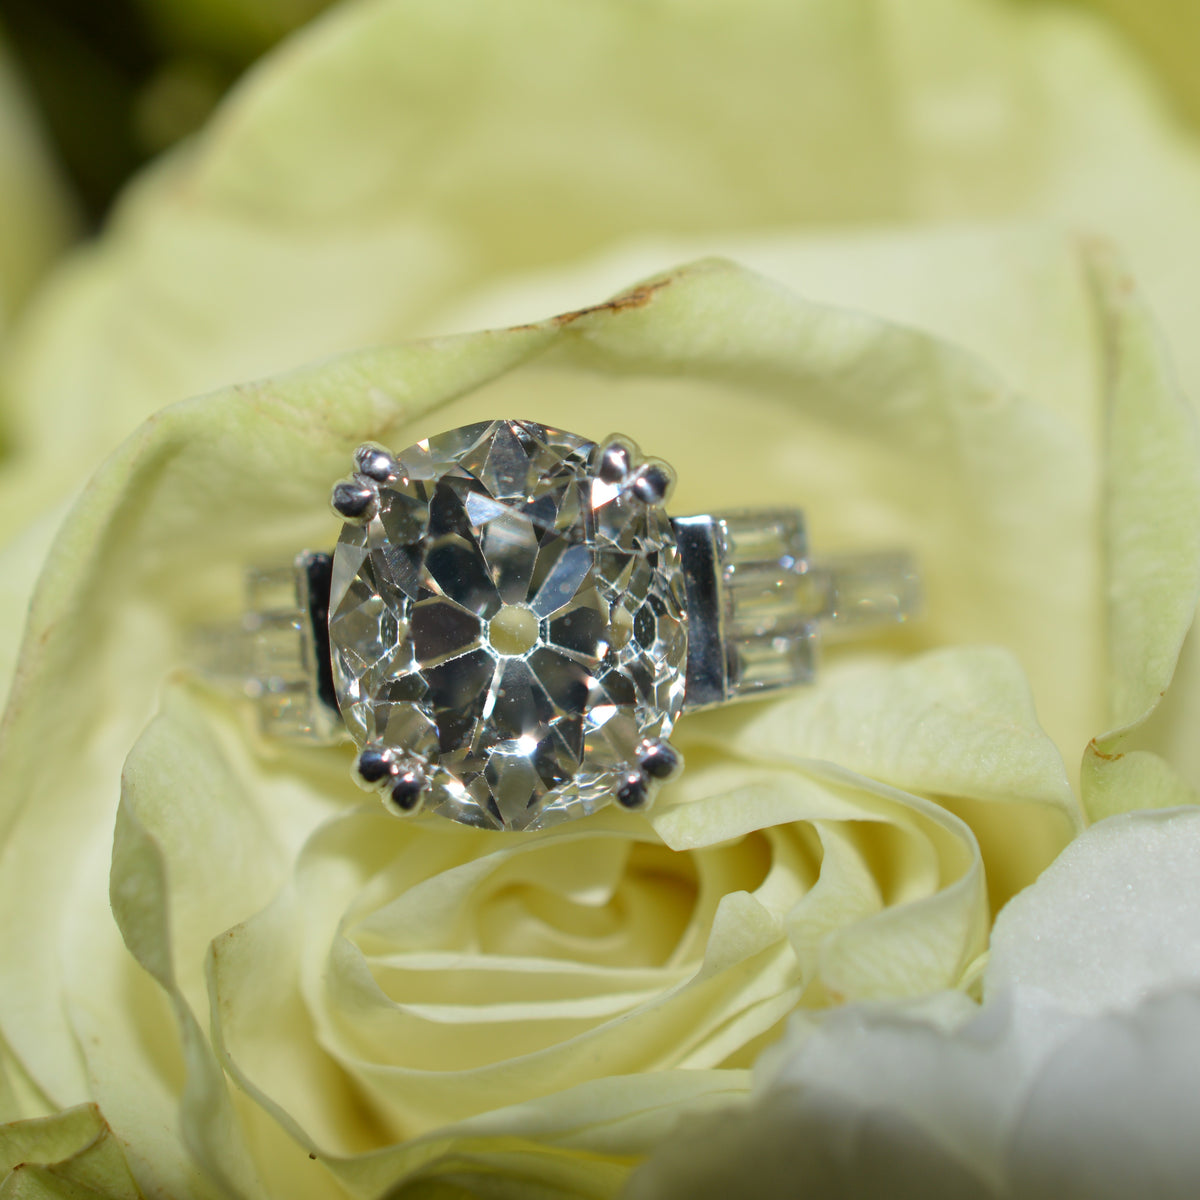 Breathtaking Platinum Art Deco Ring With A 3.71 Carat Old Mine Cut Diamond